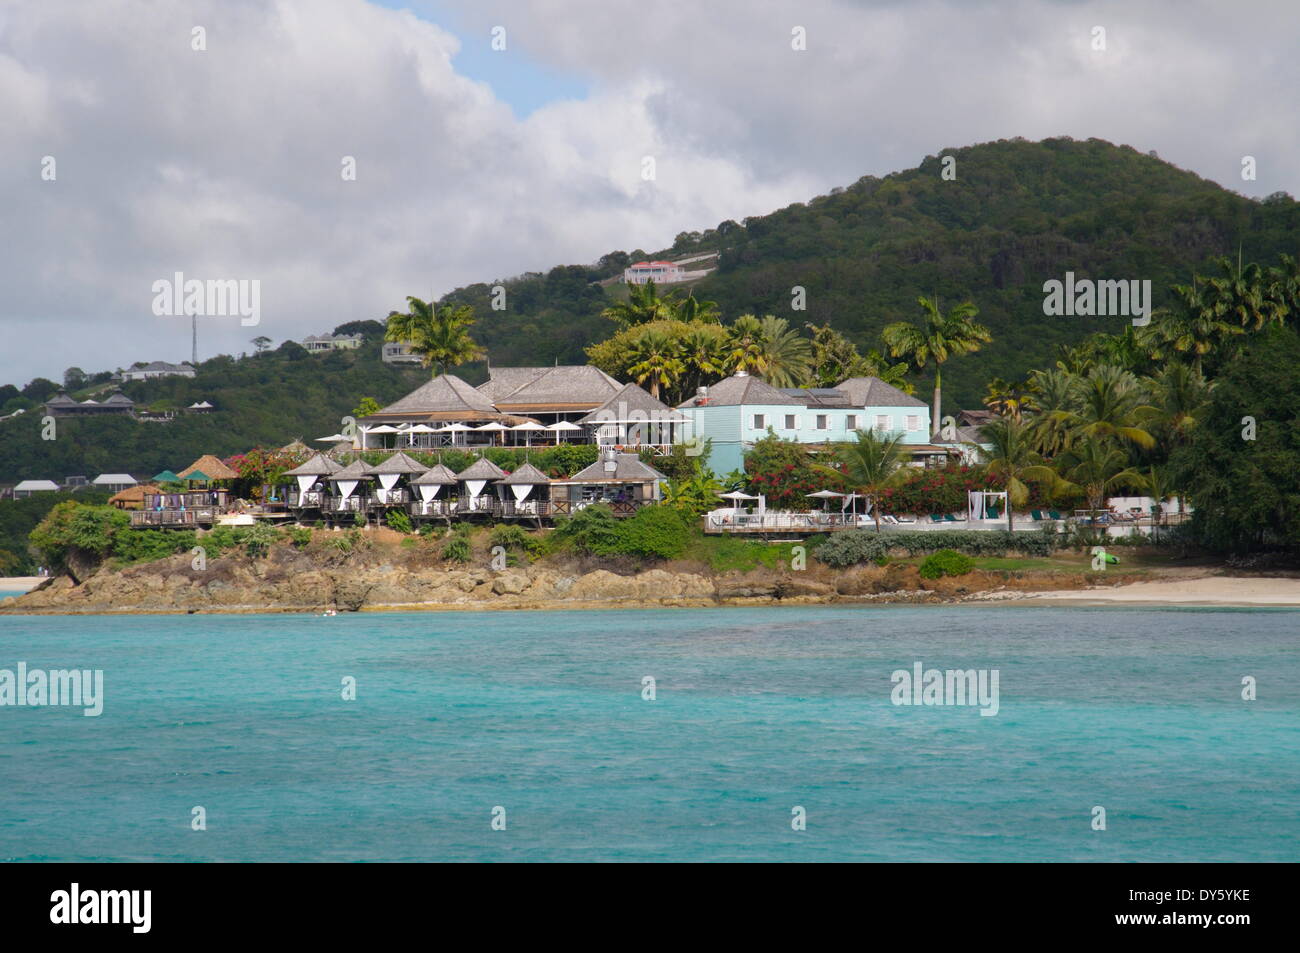 Costa oeste, Antigua, Islas de Sotavento, Antillas, Caribe, América Central Foto de stock